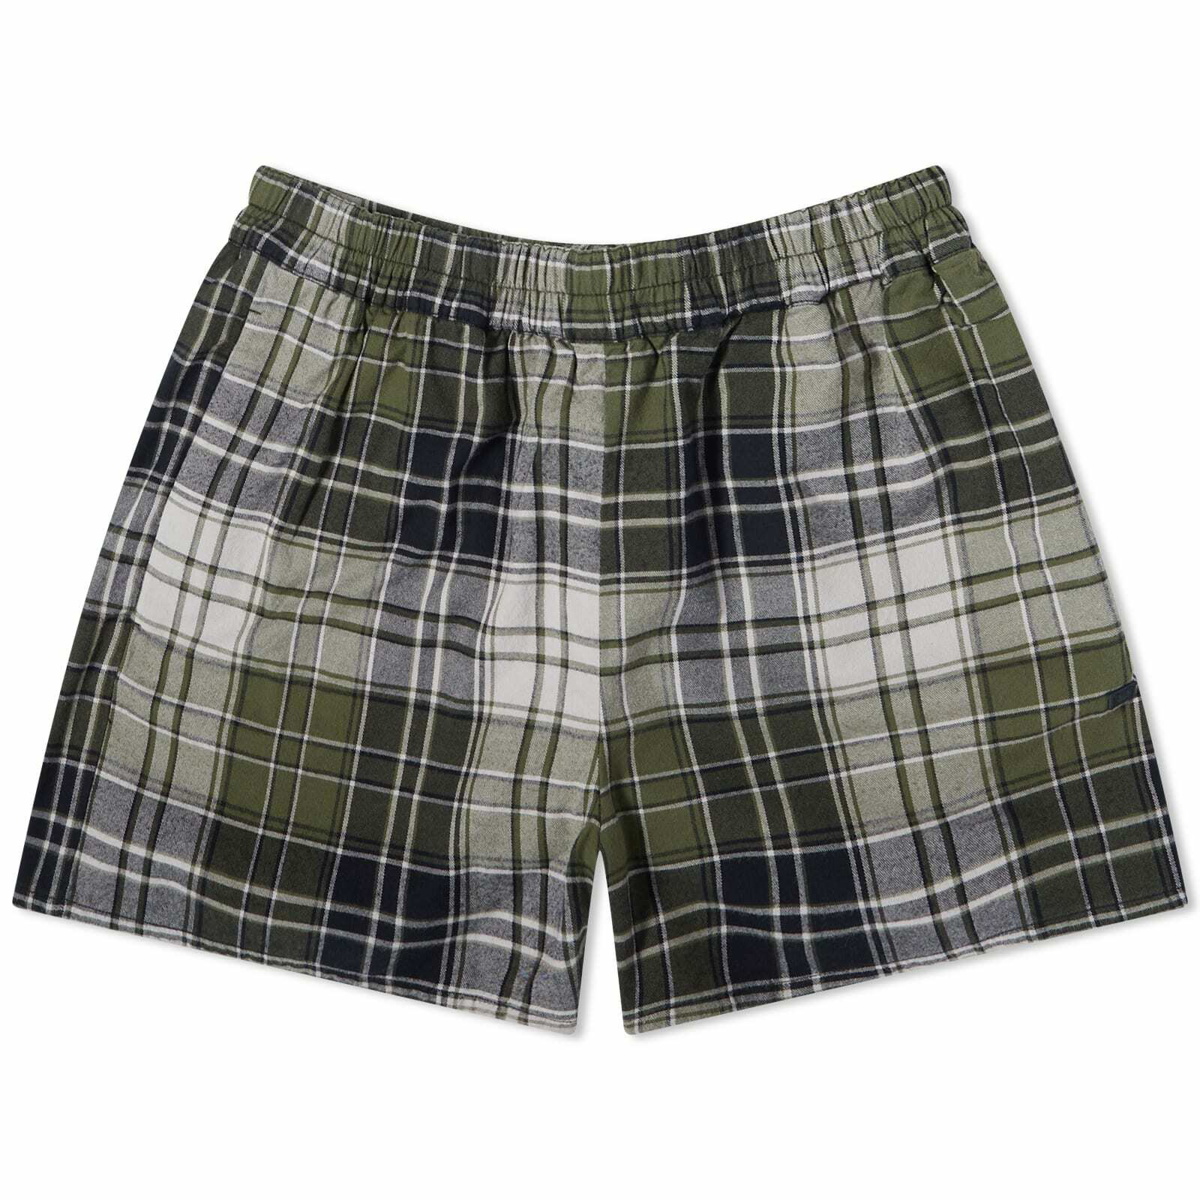 Roxx flannel checked shorts in green - Acne Studios